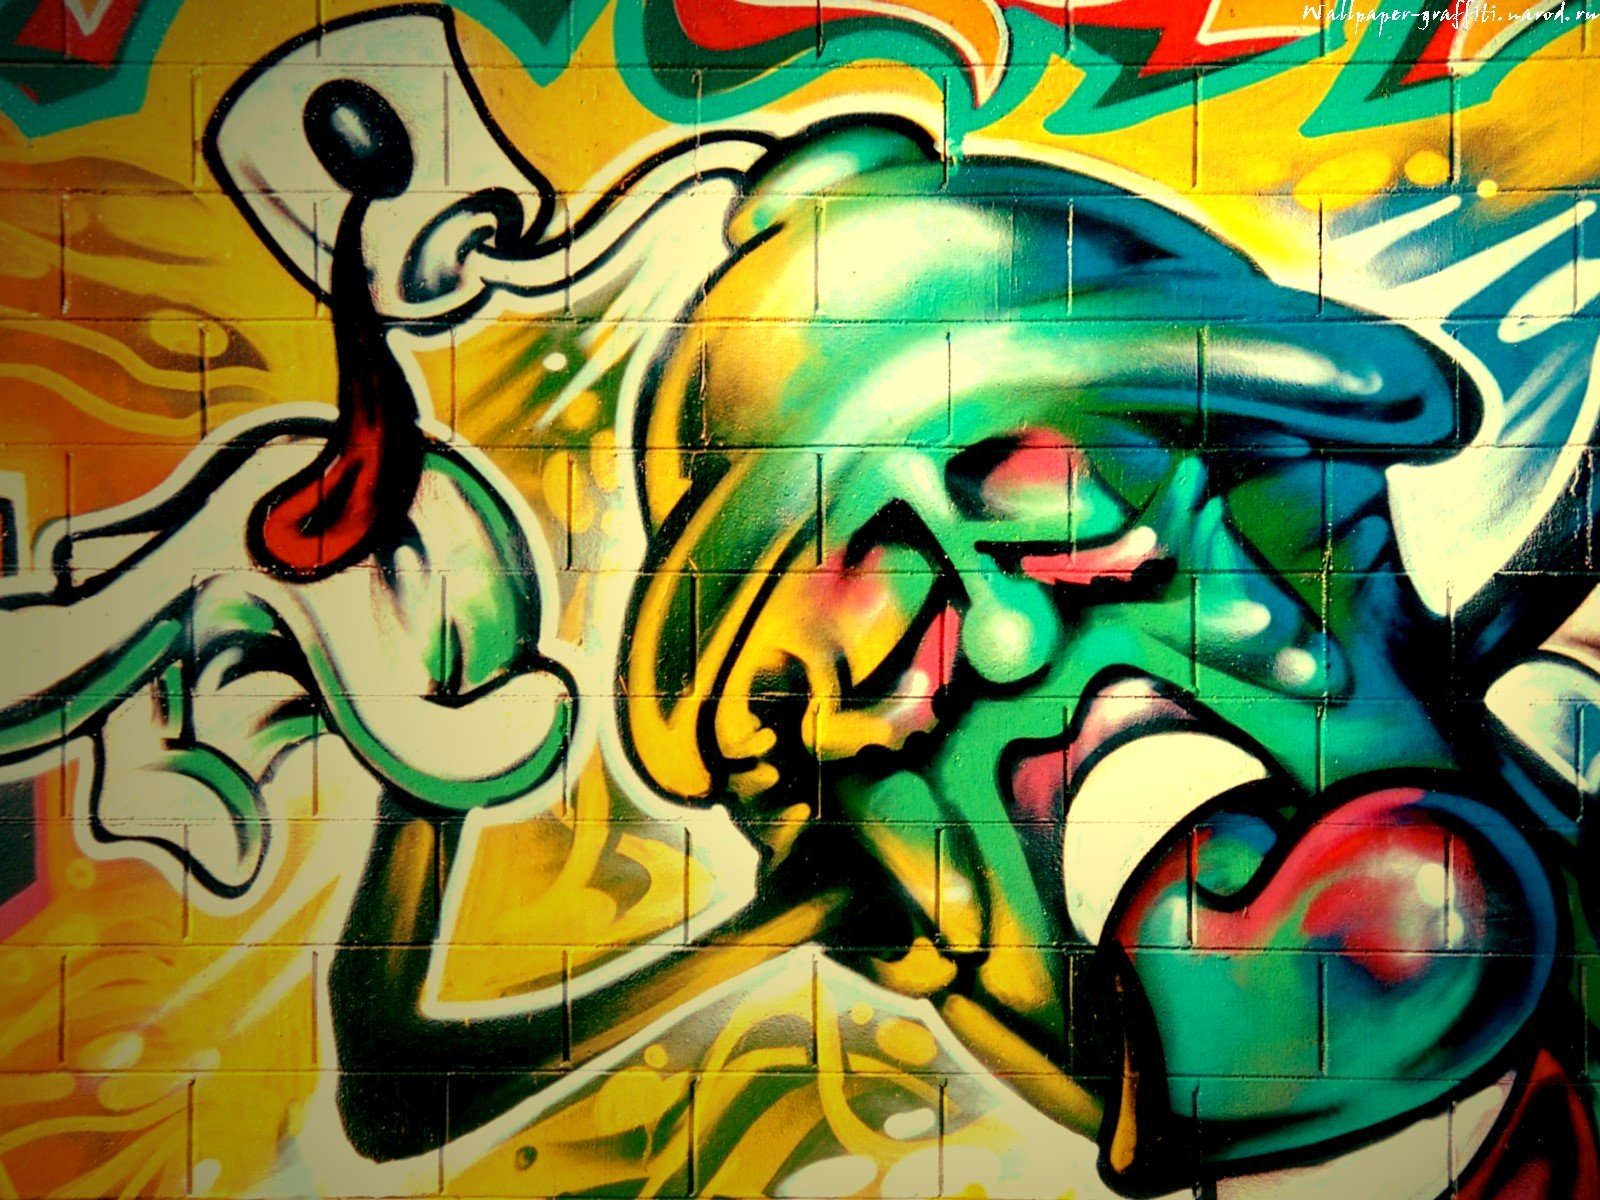 Download Free Graffiti Wallpaper Images For Laptop amp Desktops